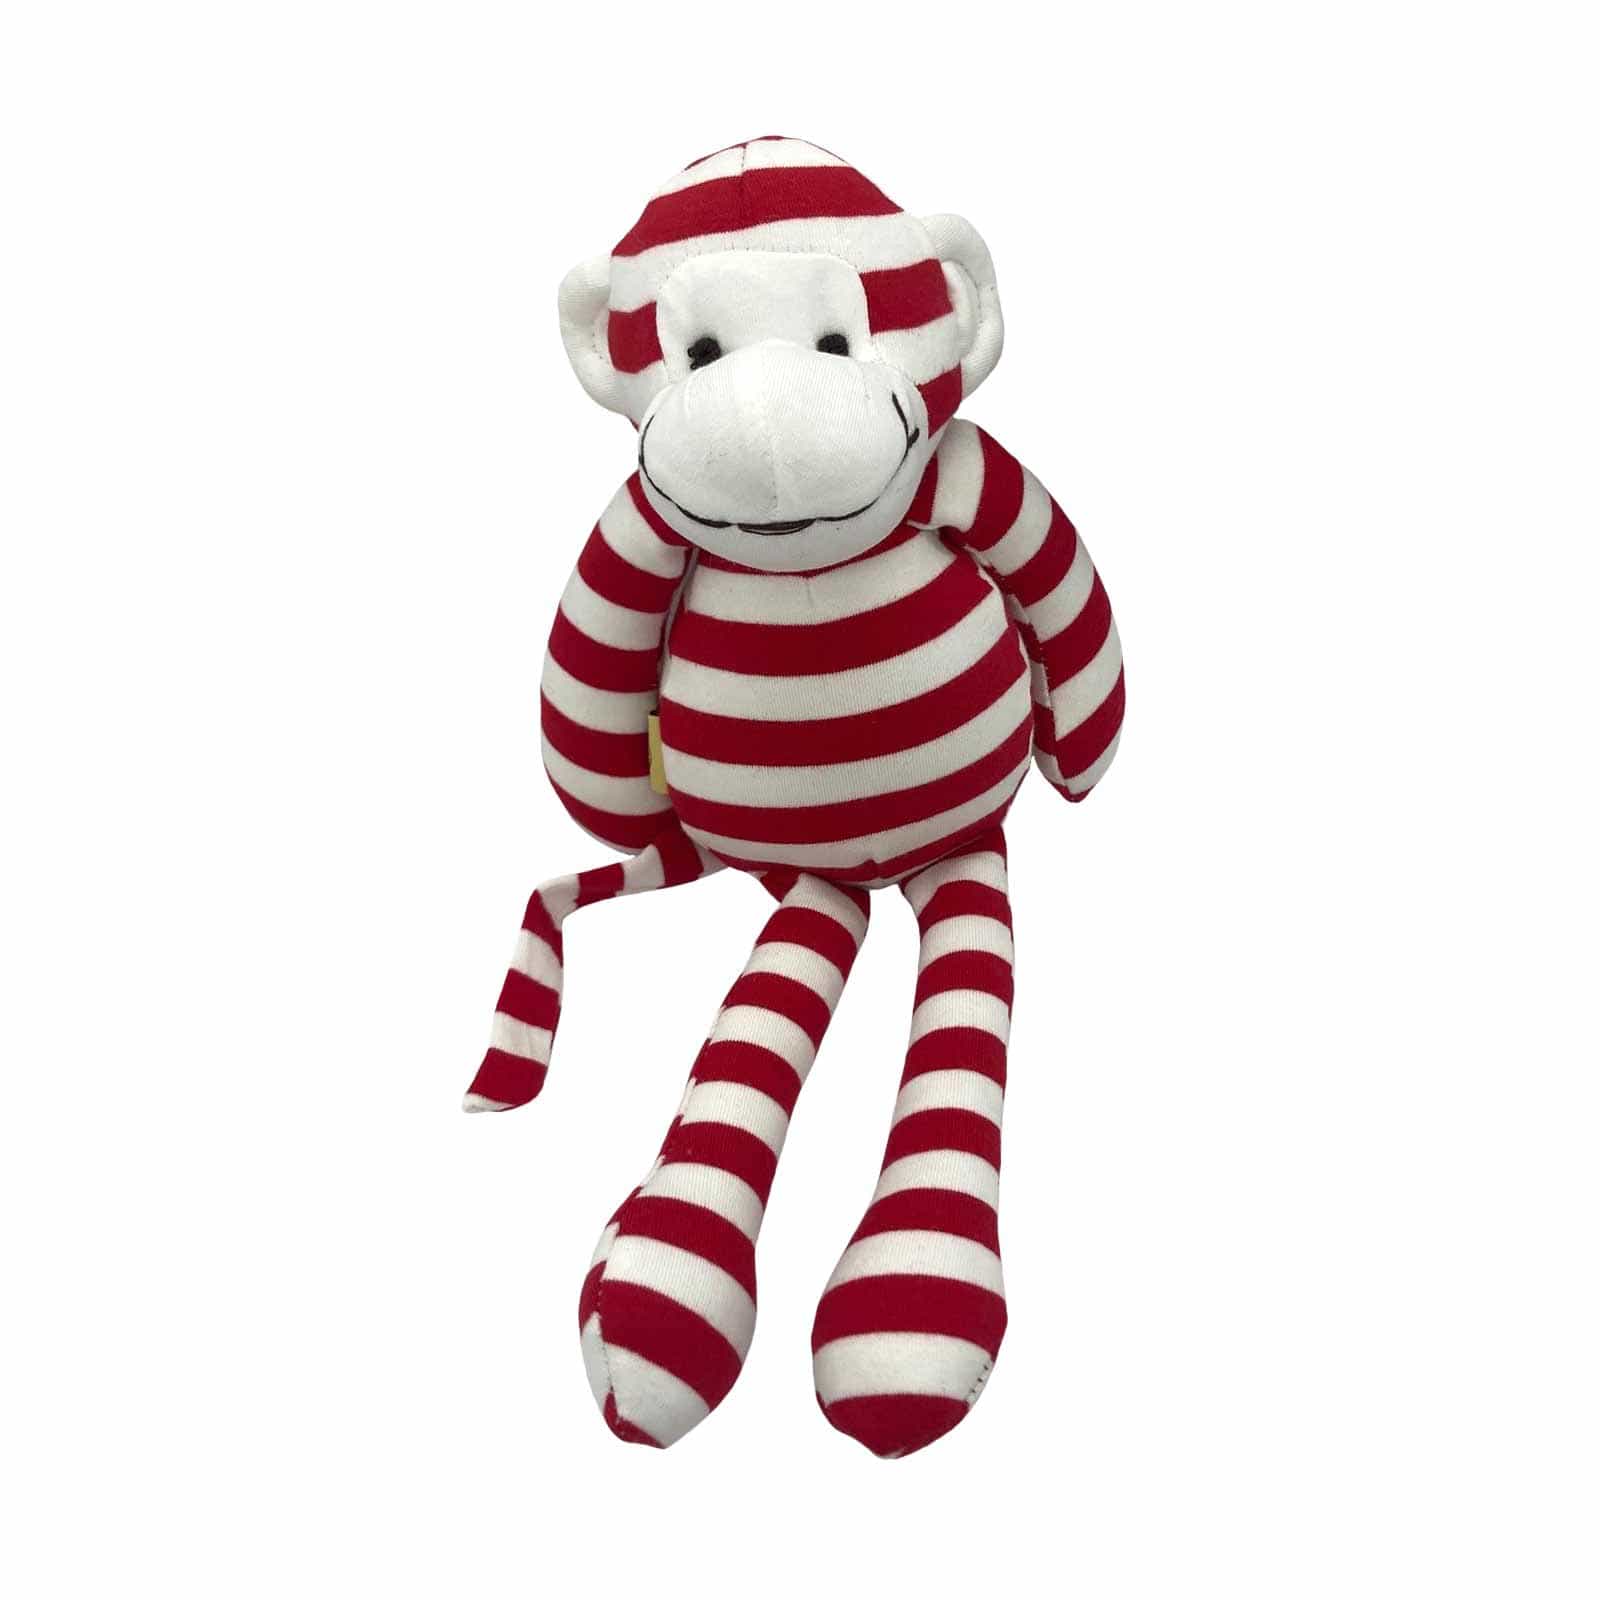 32cm Red Striped Monkey Plush Toy